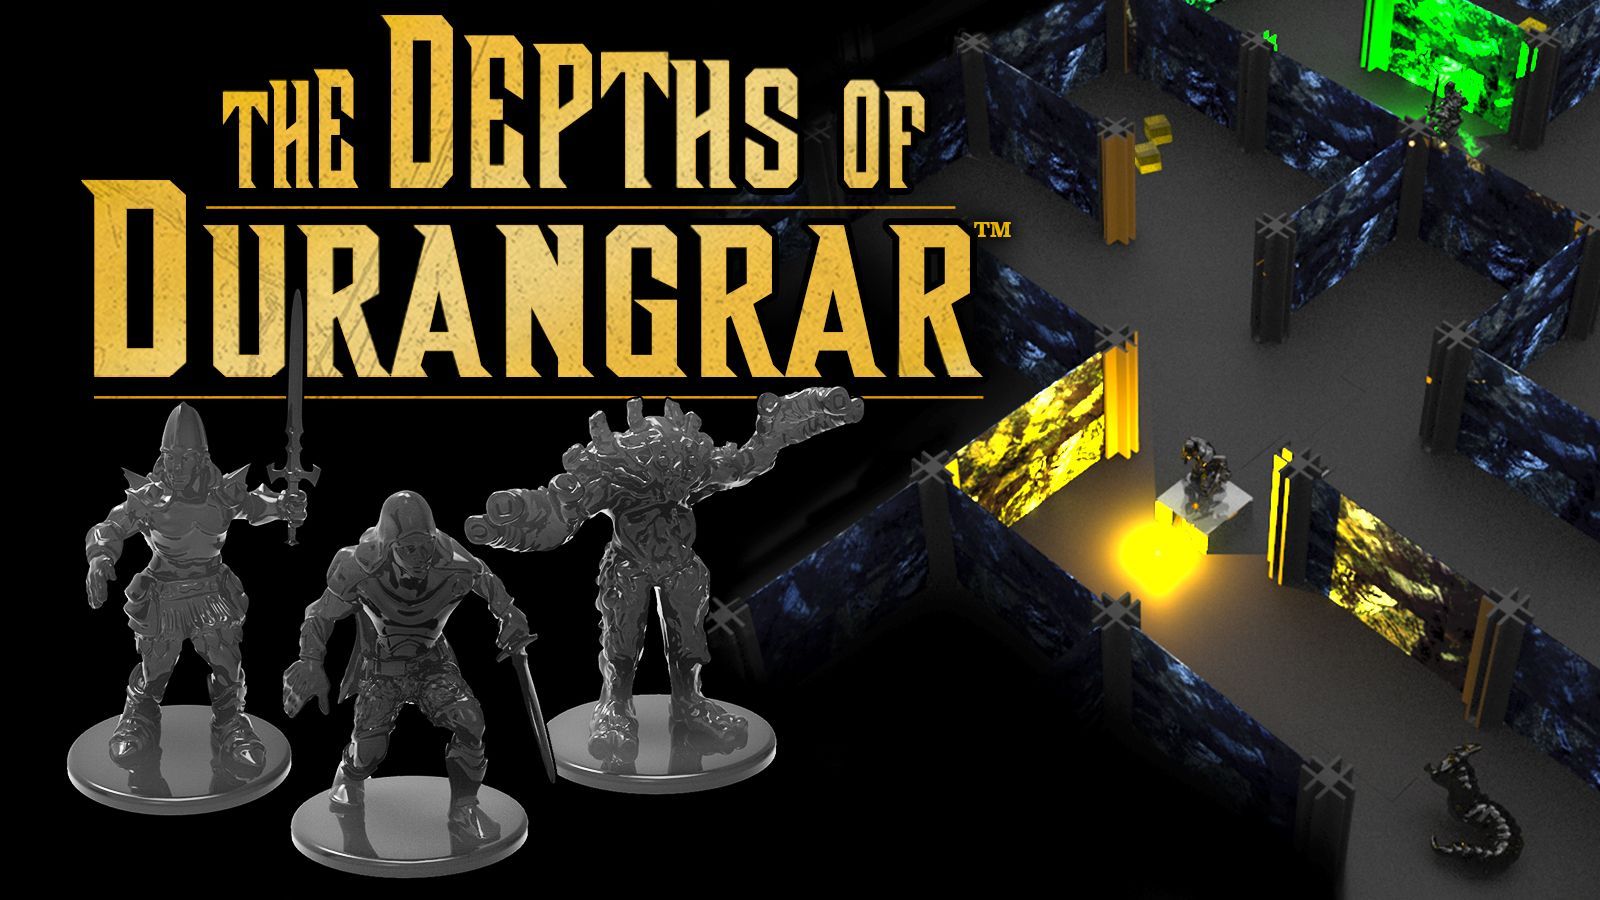 The Depths of Durangrar